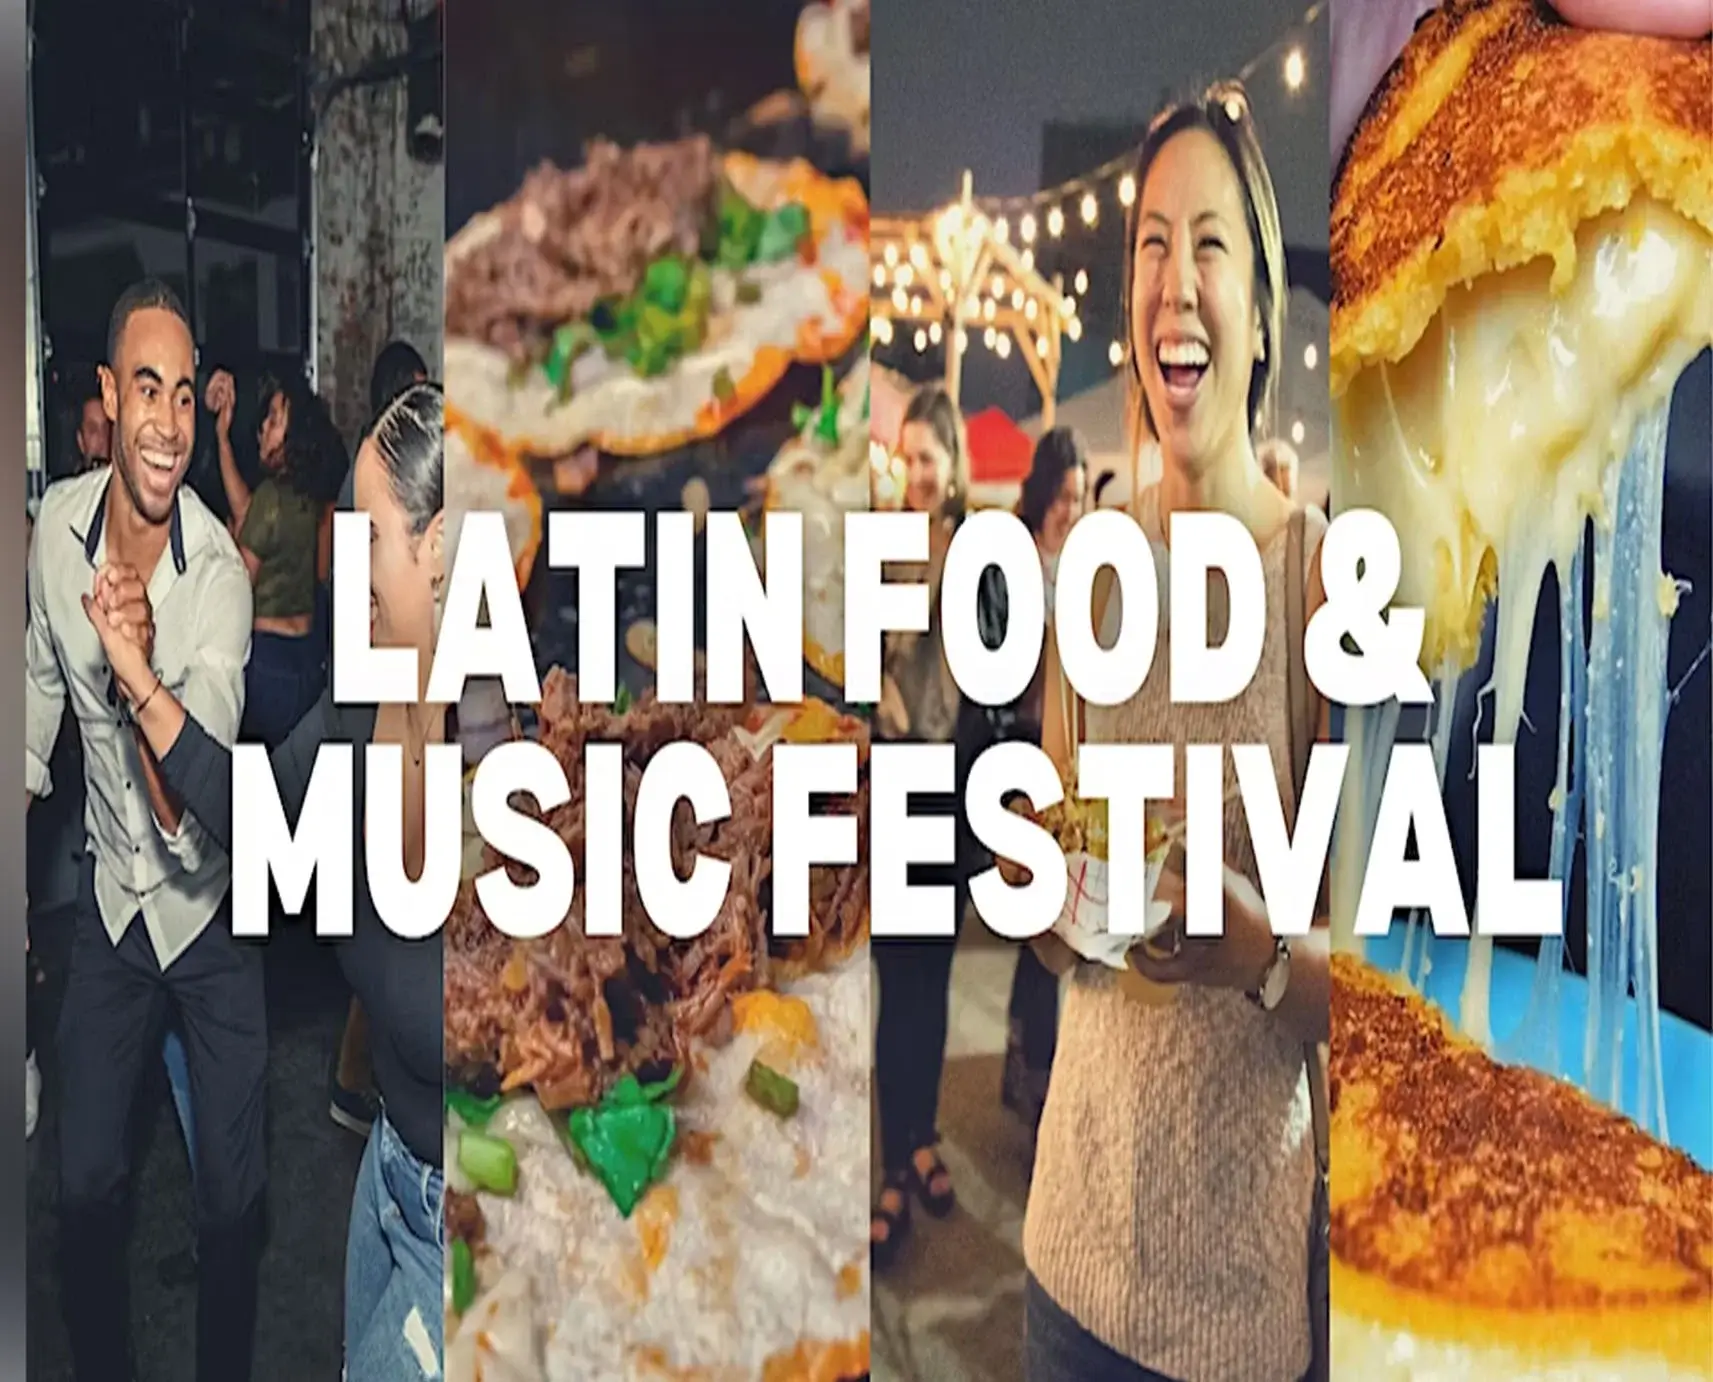 Latin Food & Music Festival